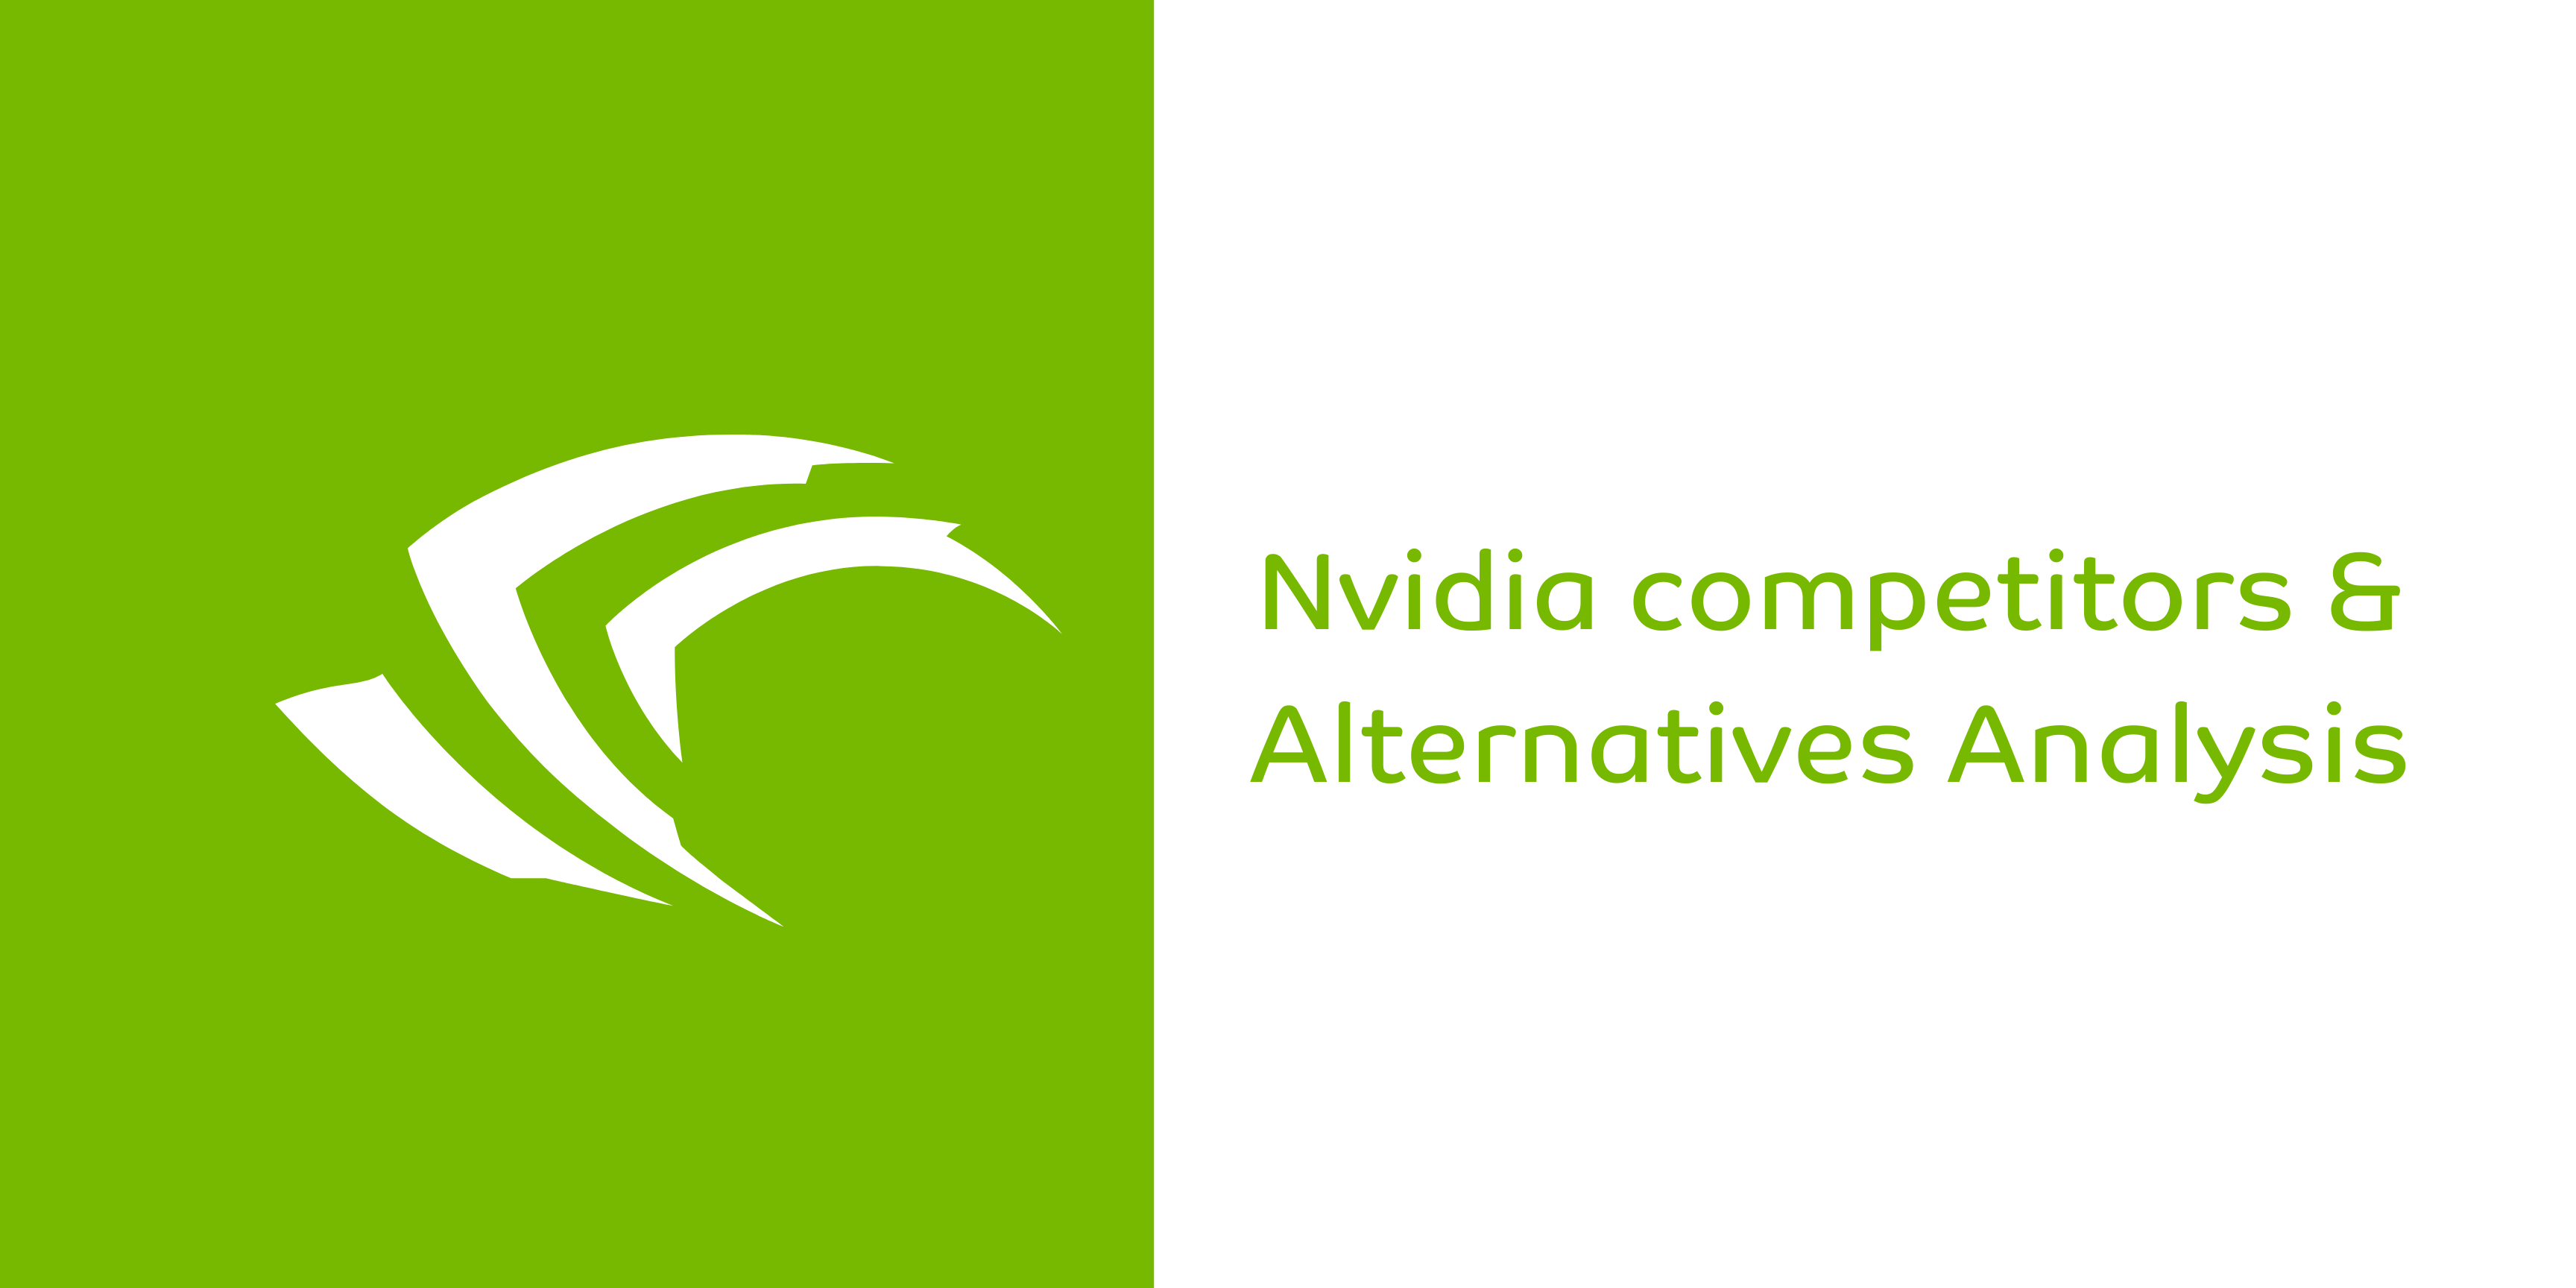 Nvidia competitors